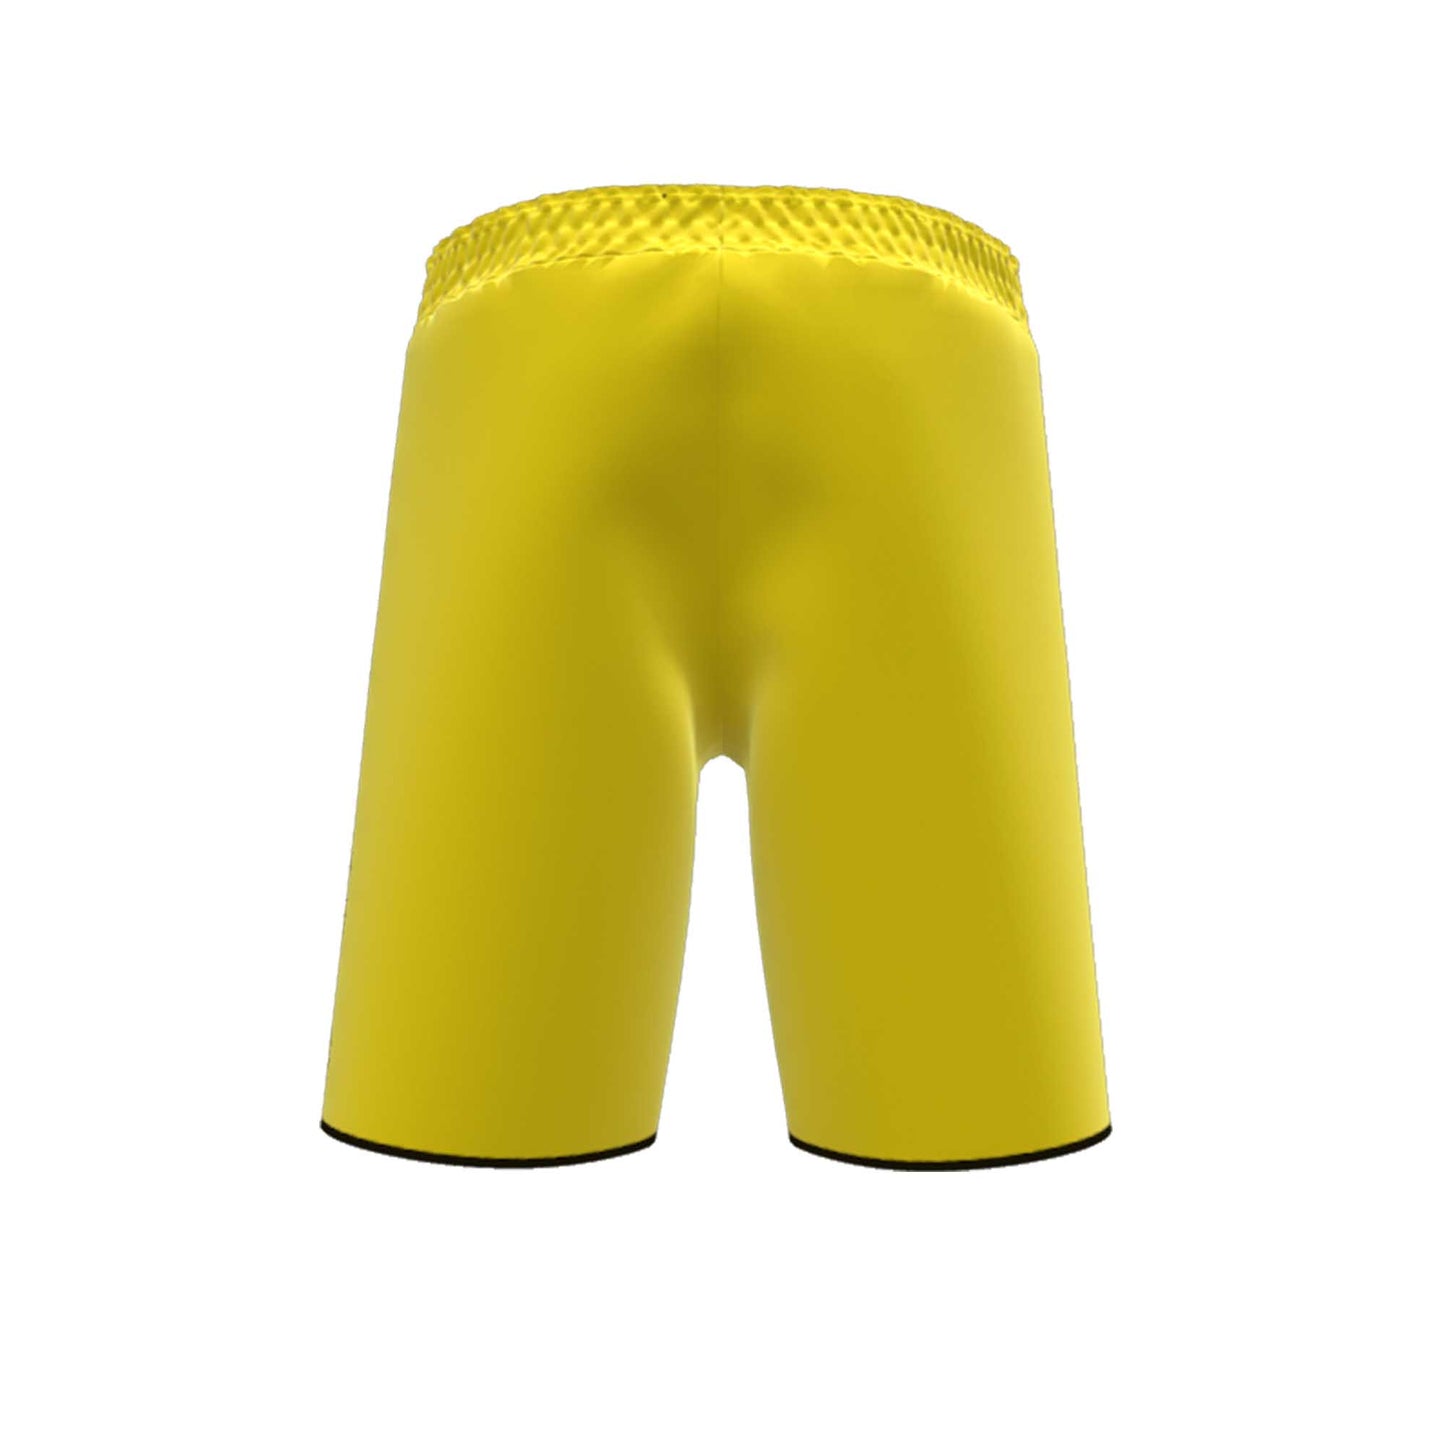 Wellington Phoenix A-League Replica Yellow Shorts - Men